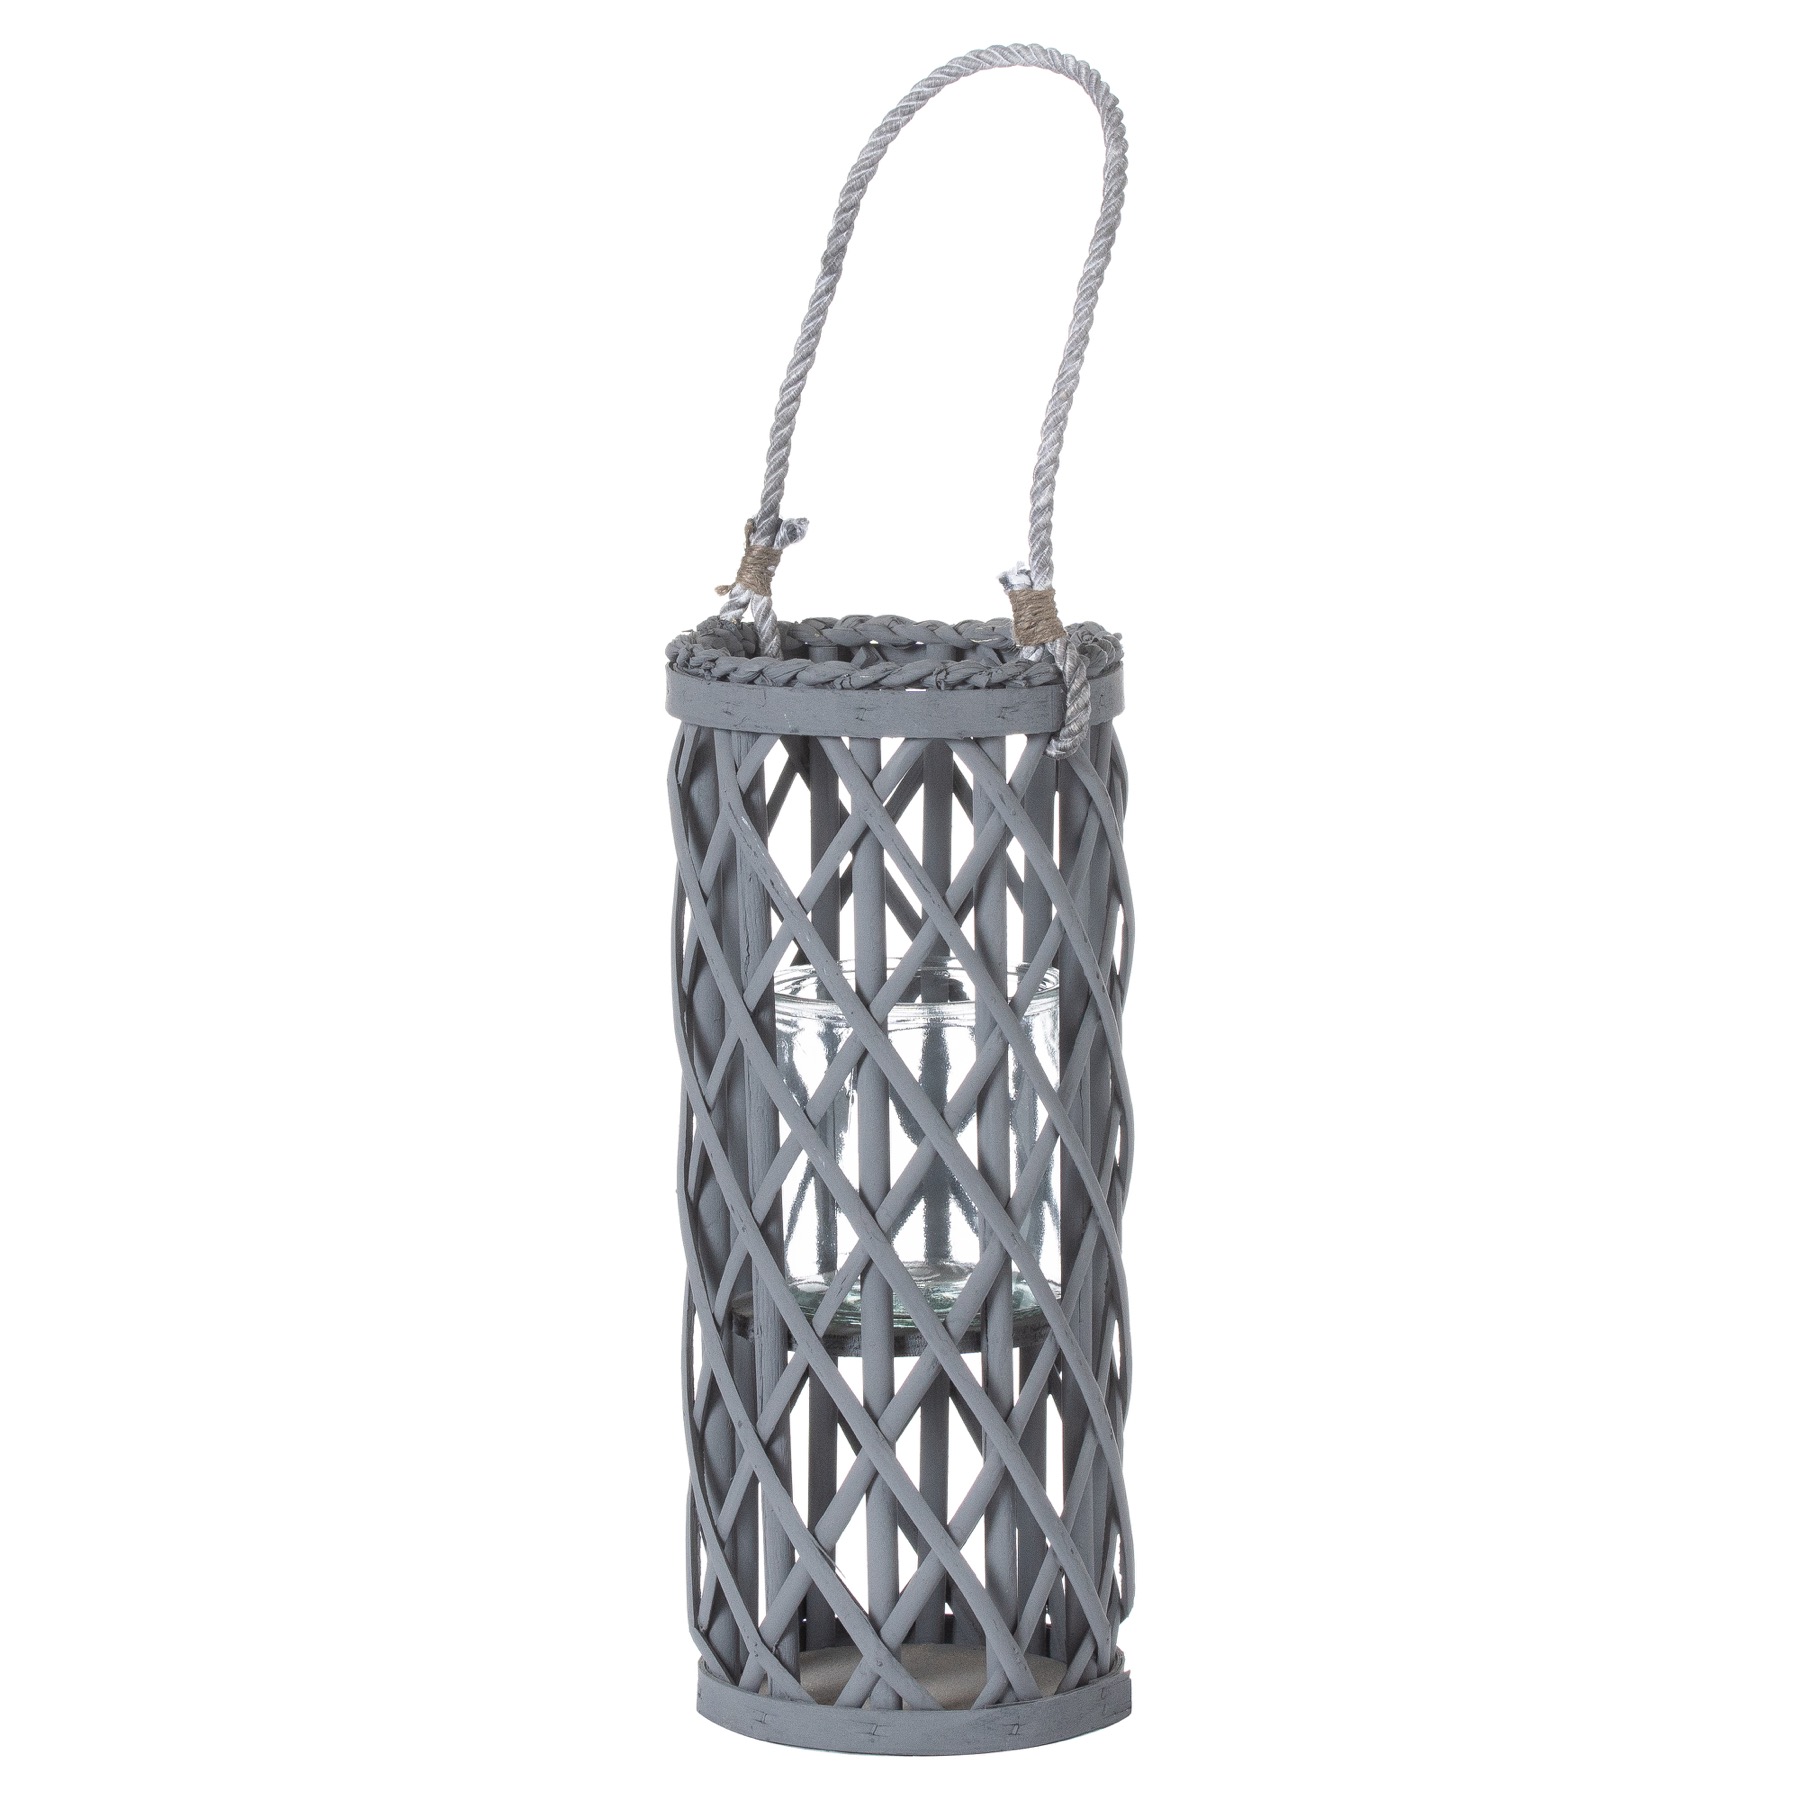 Small Grey Wicker Lantern With Glass Hurricane - Image 1